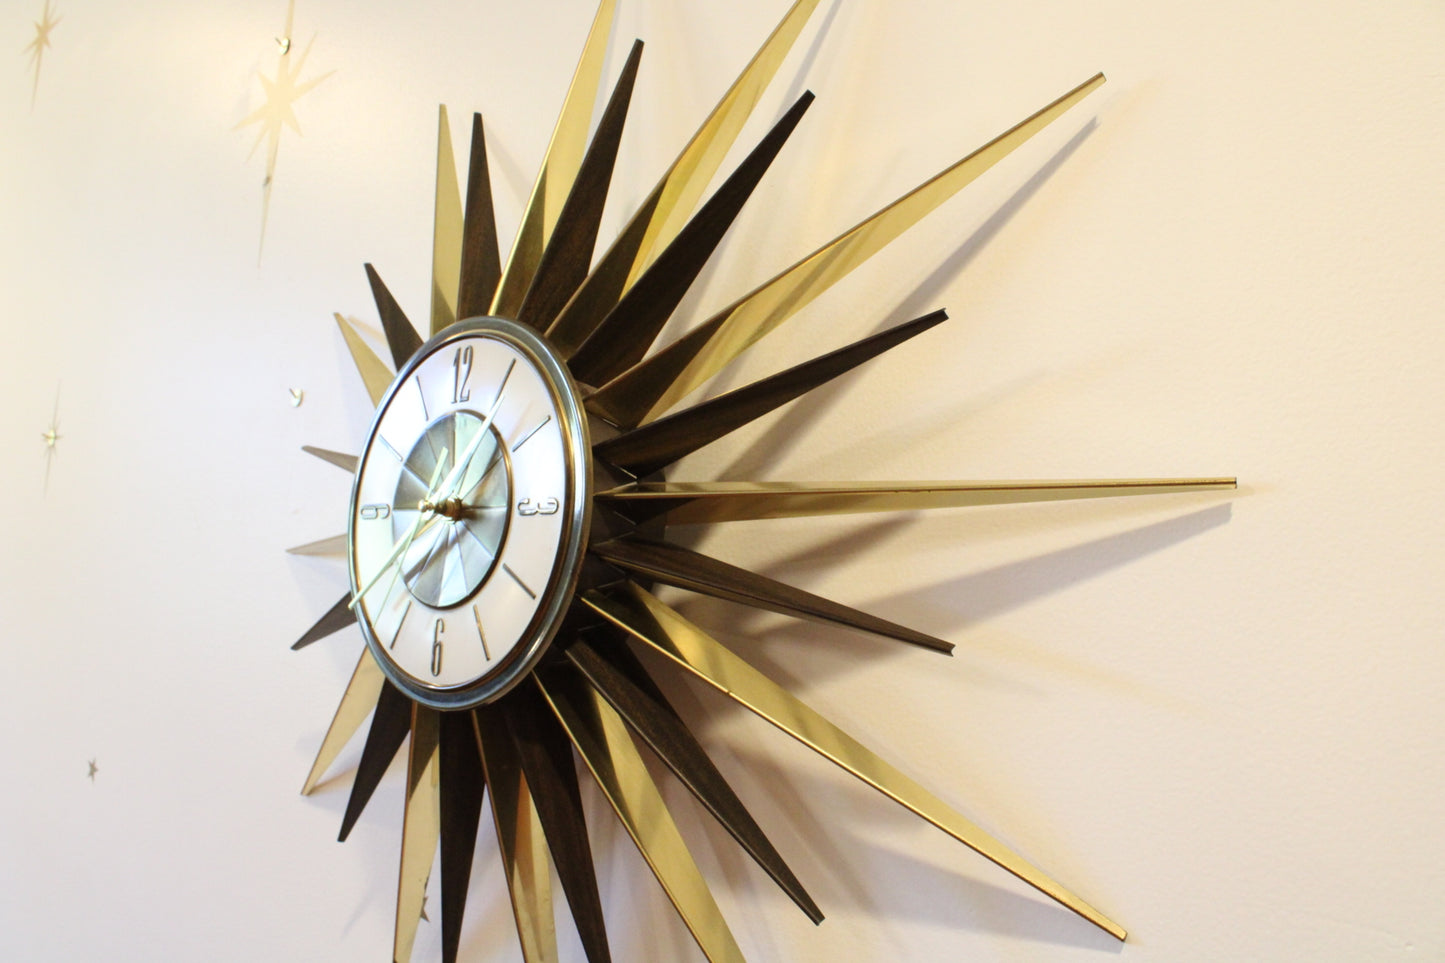 Elgin Starburst Wall Clock